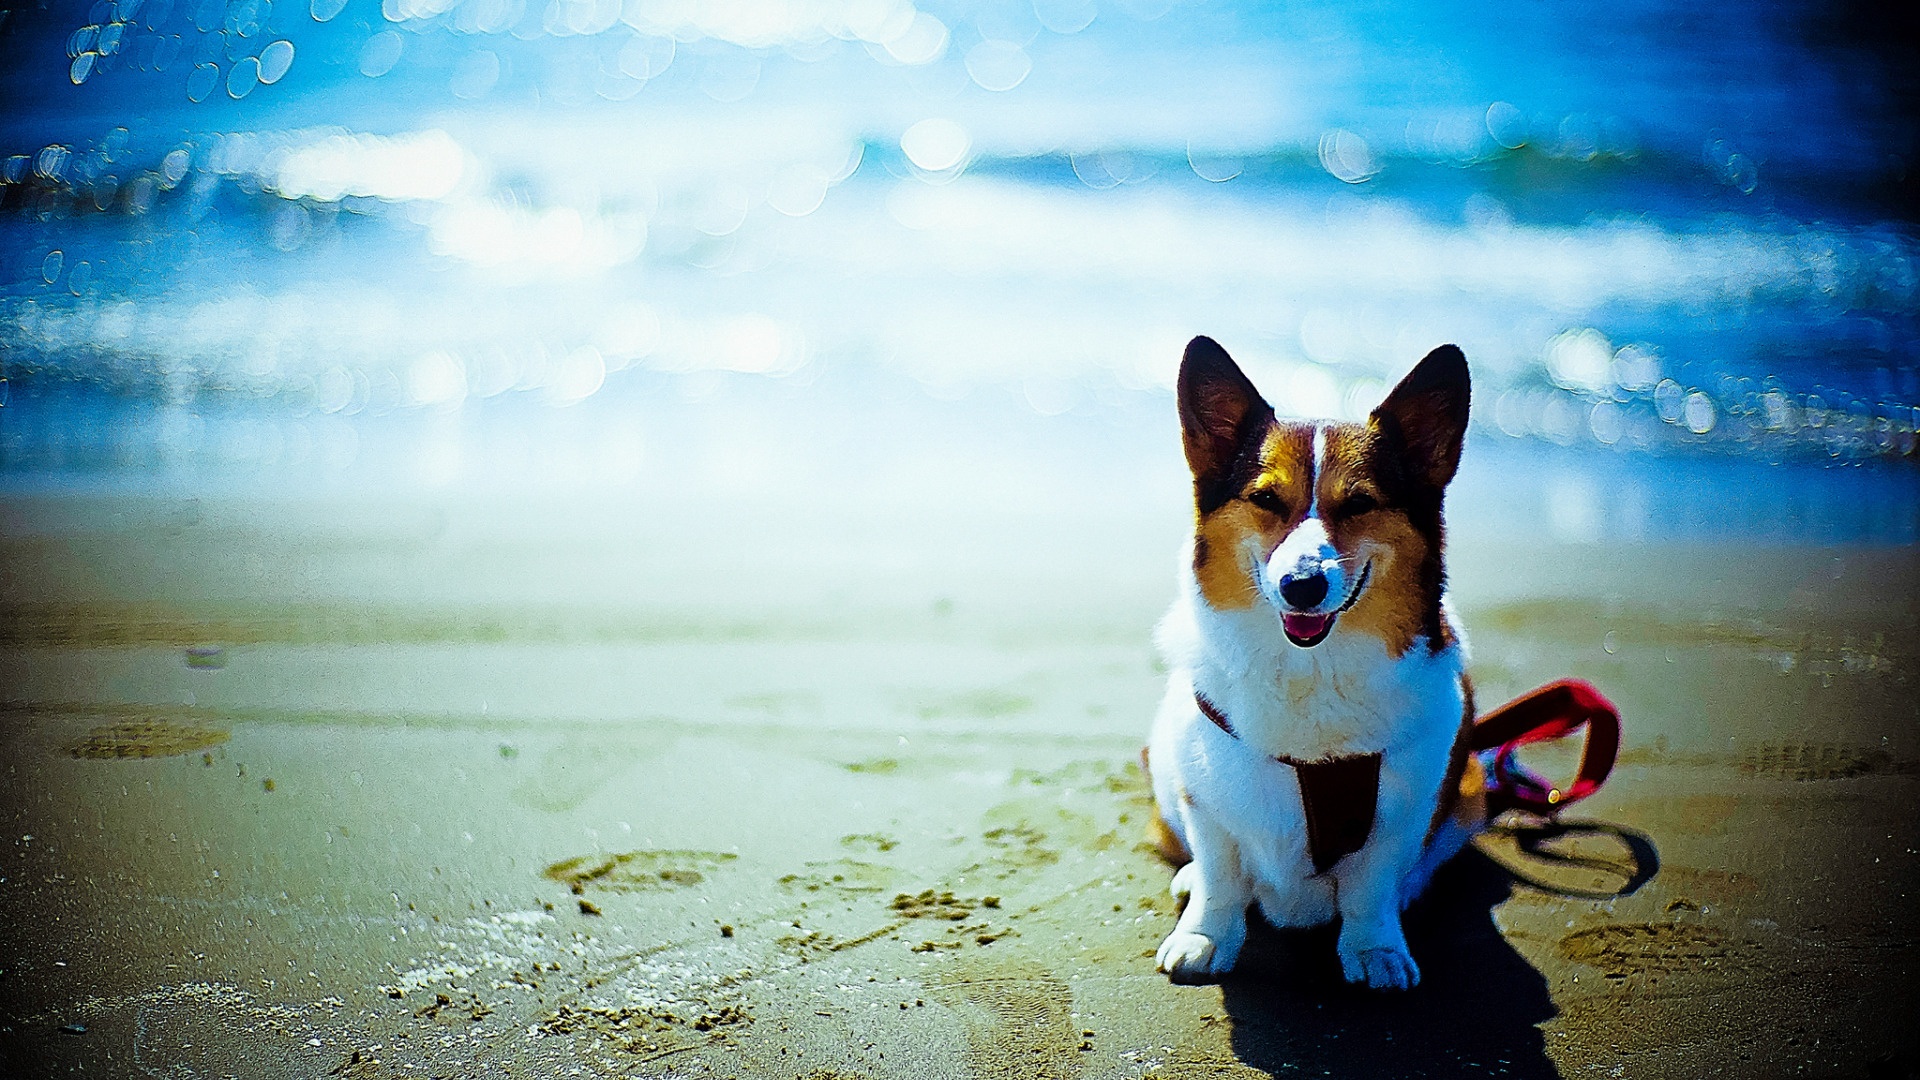 Dog On The Beach free photo